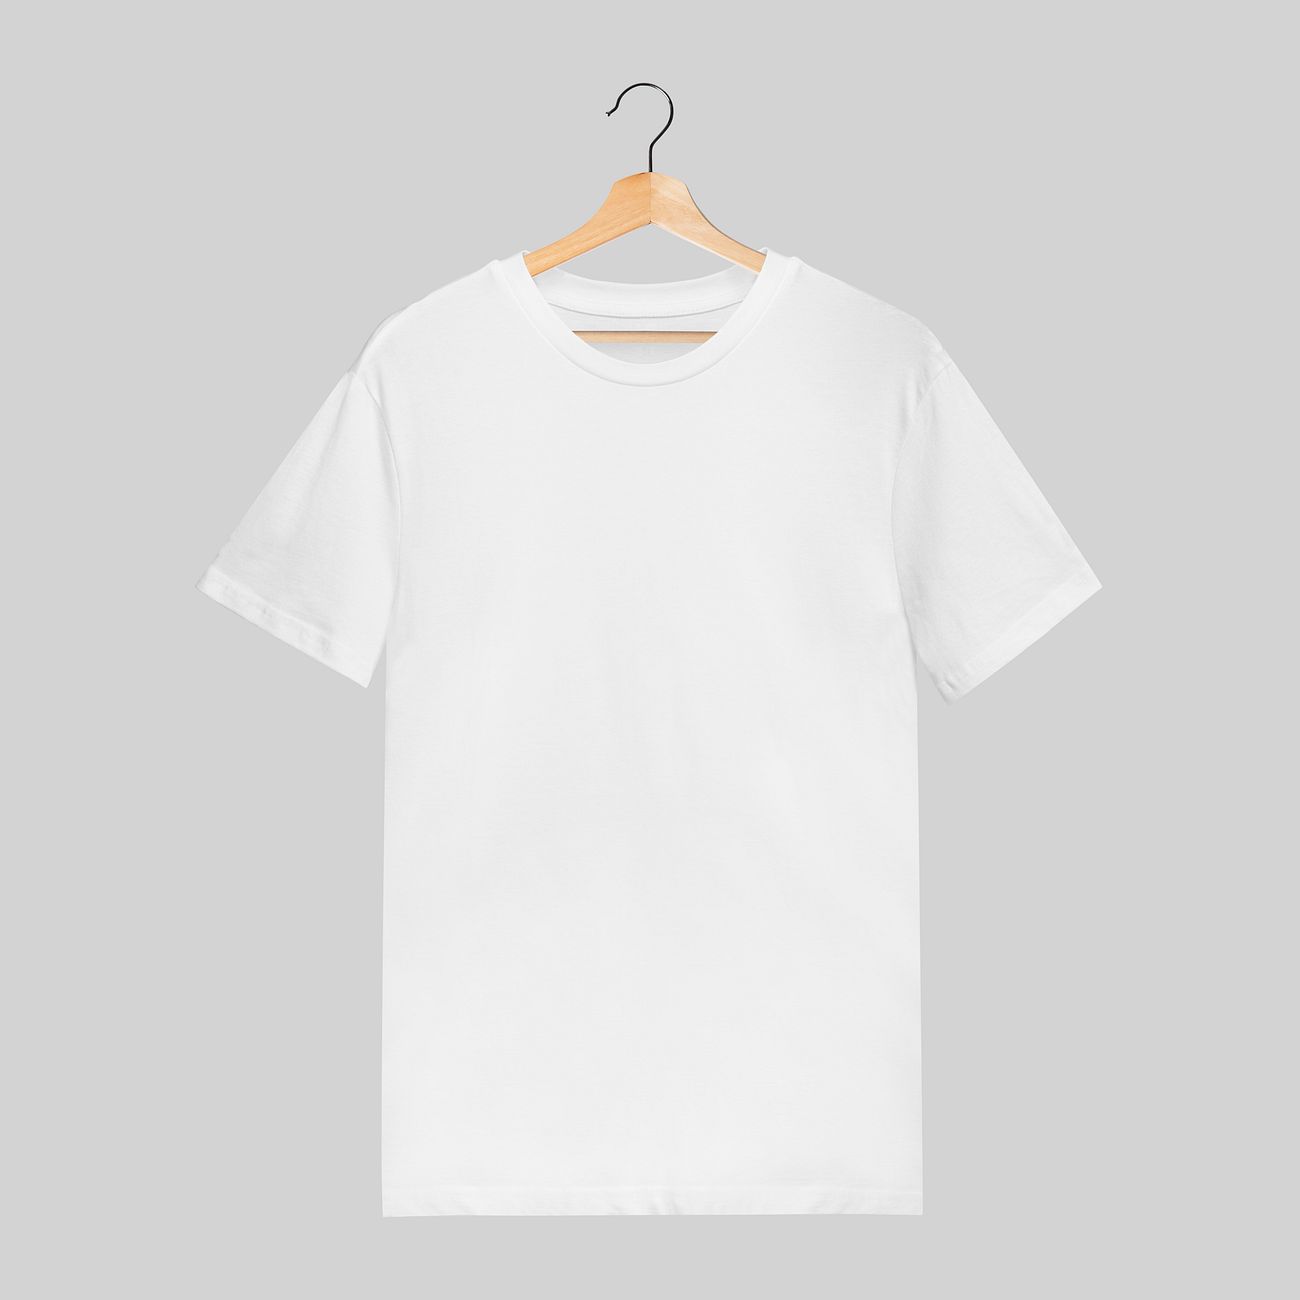 White t-shirt mockup on gray | Premium PSD Mockup - rawpixel